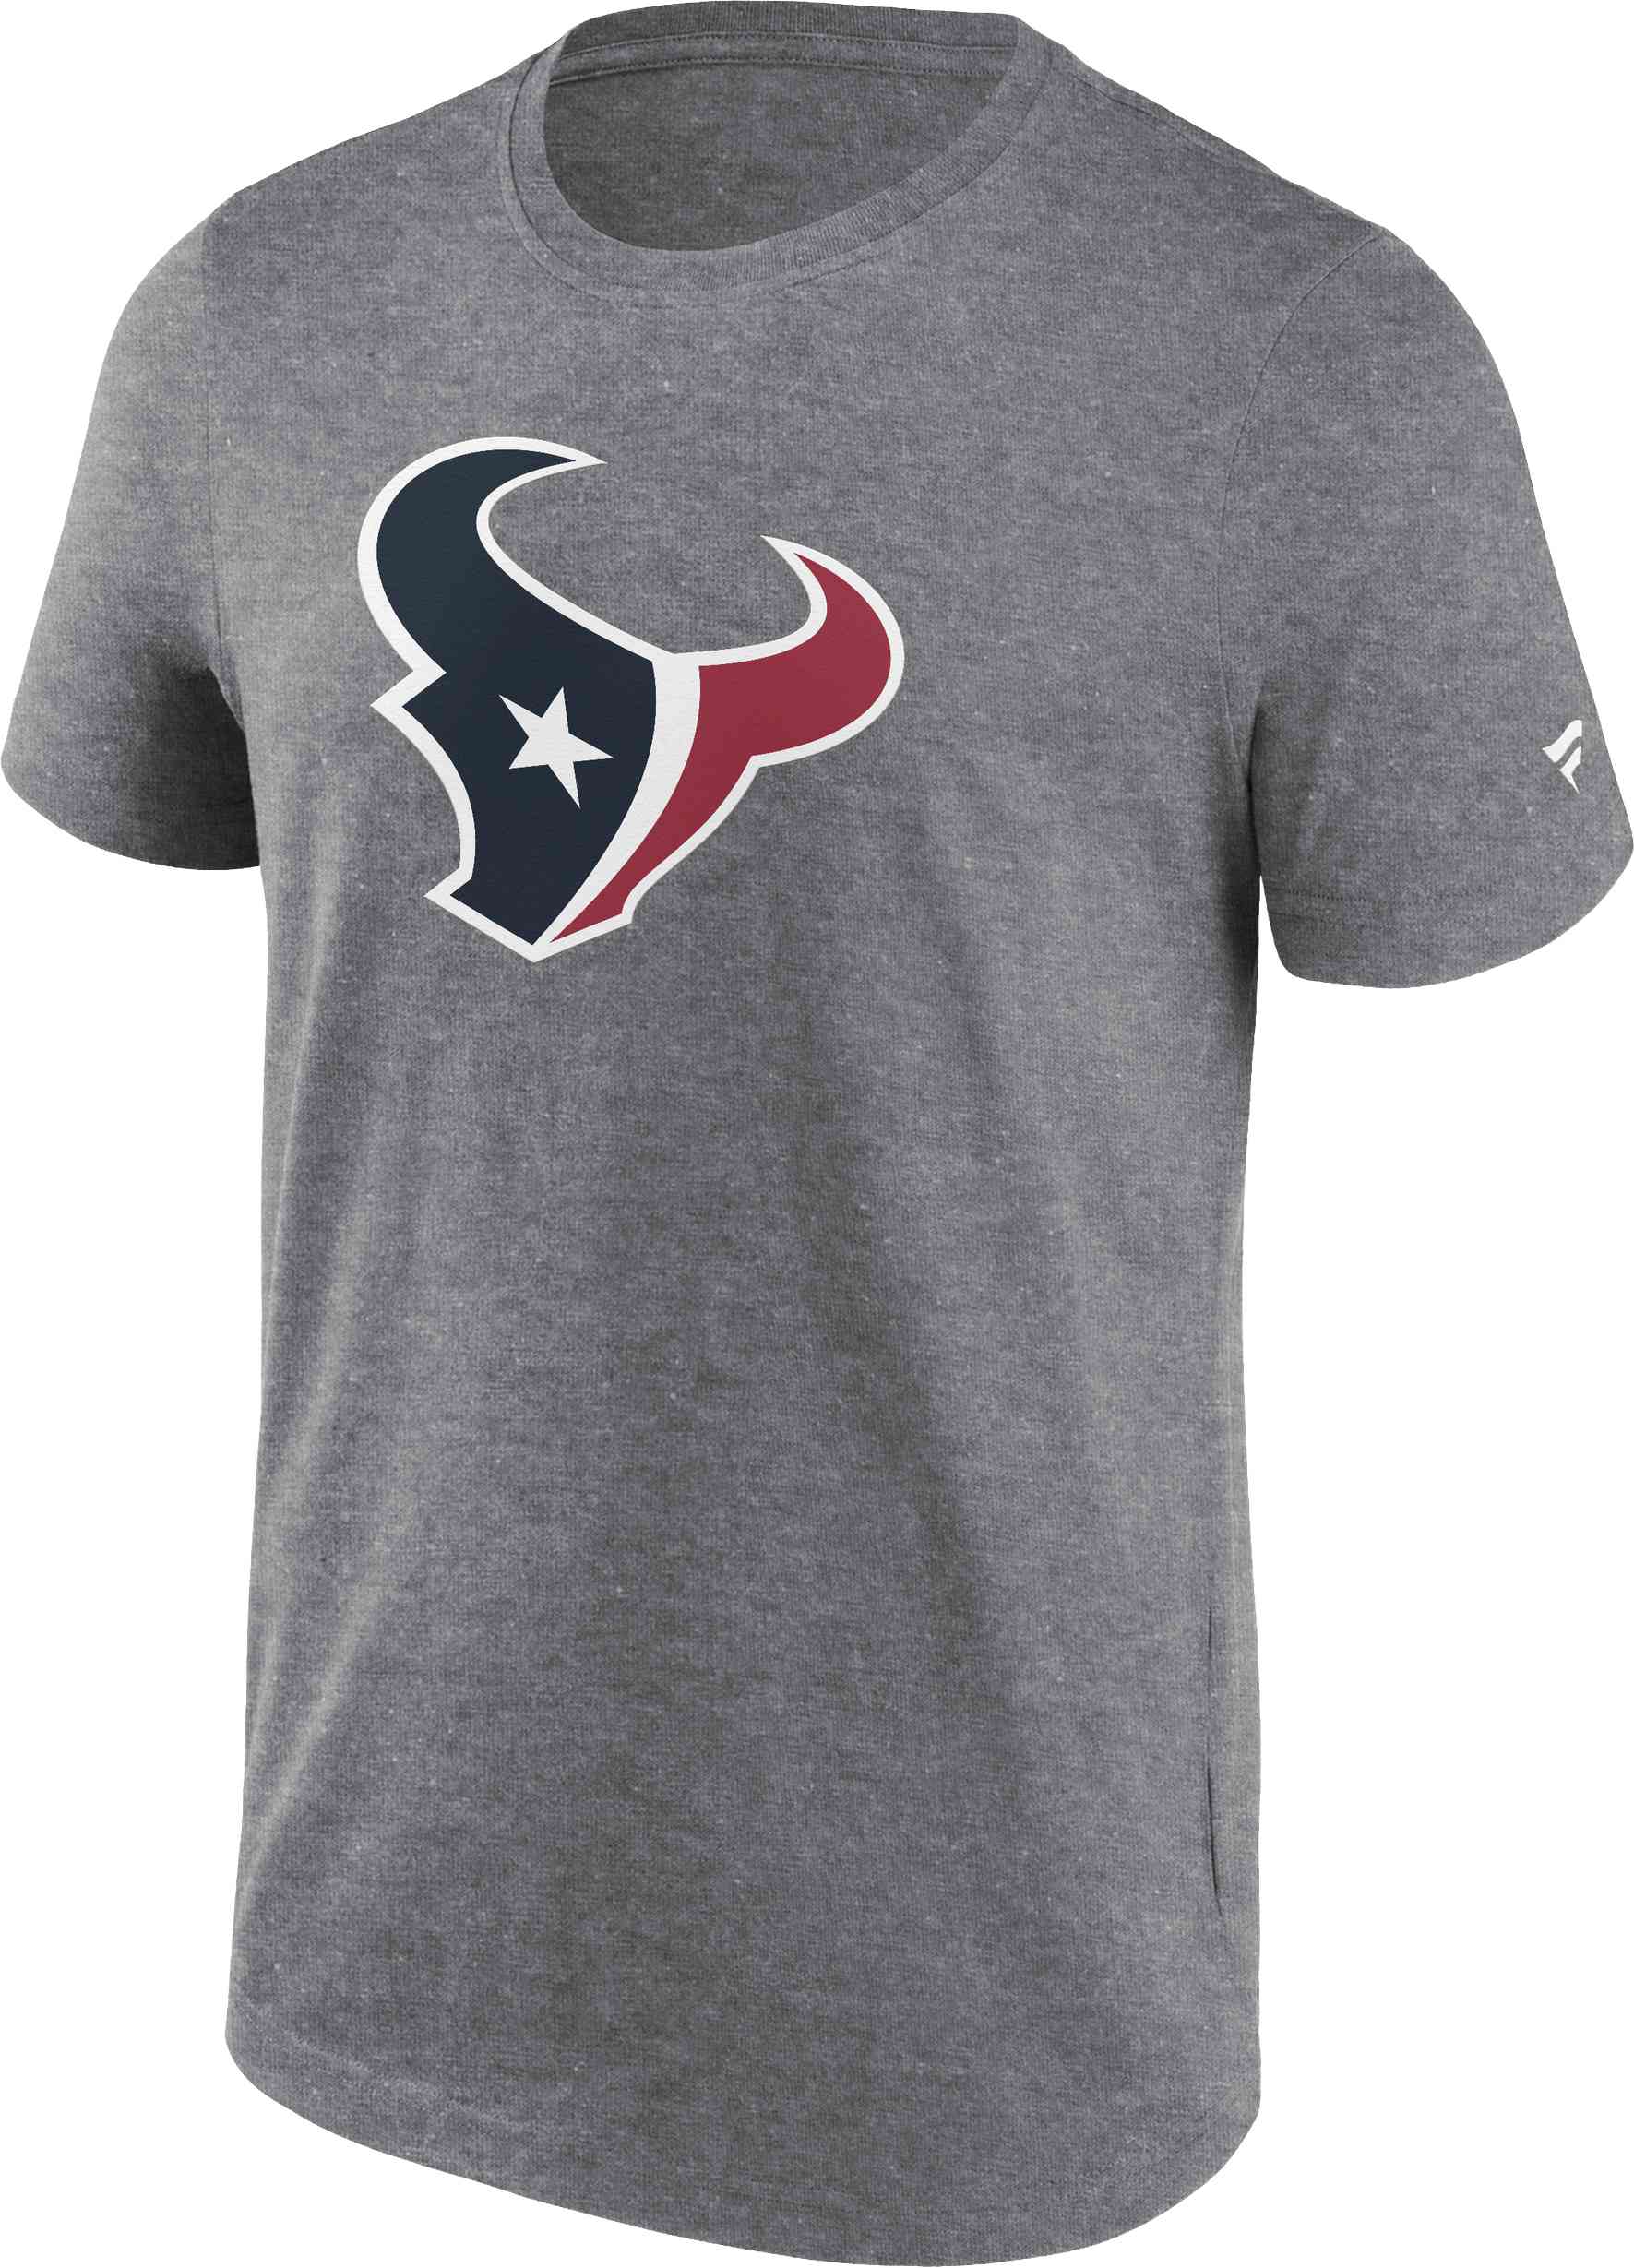 Fanatics - NFL Houston Texans Primary Logo Graphic T-Shirt